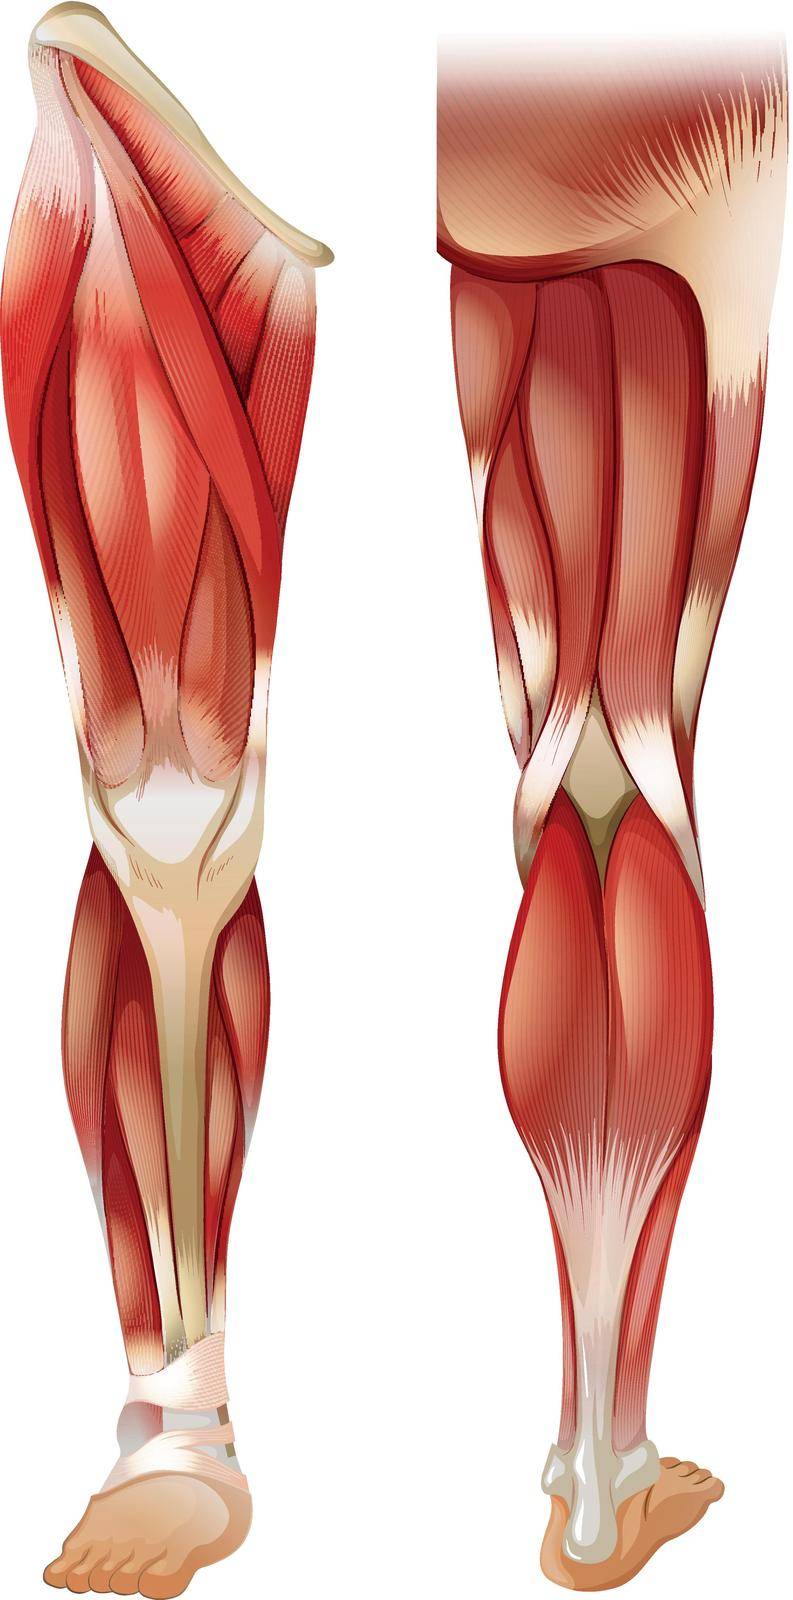 Leg muscle by iimages